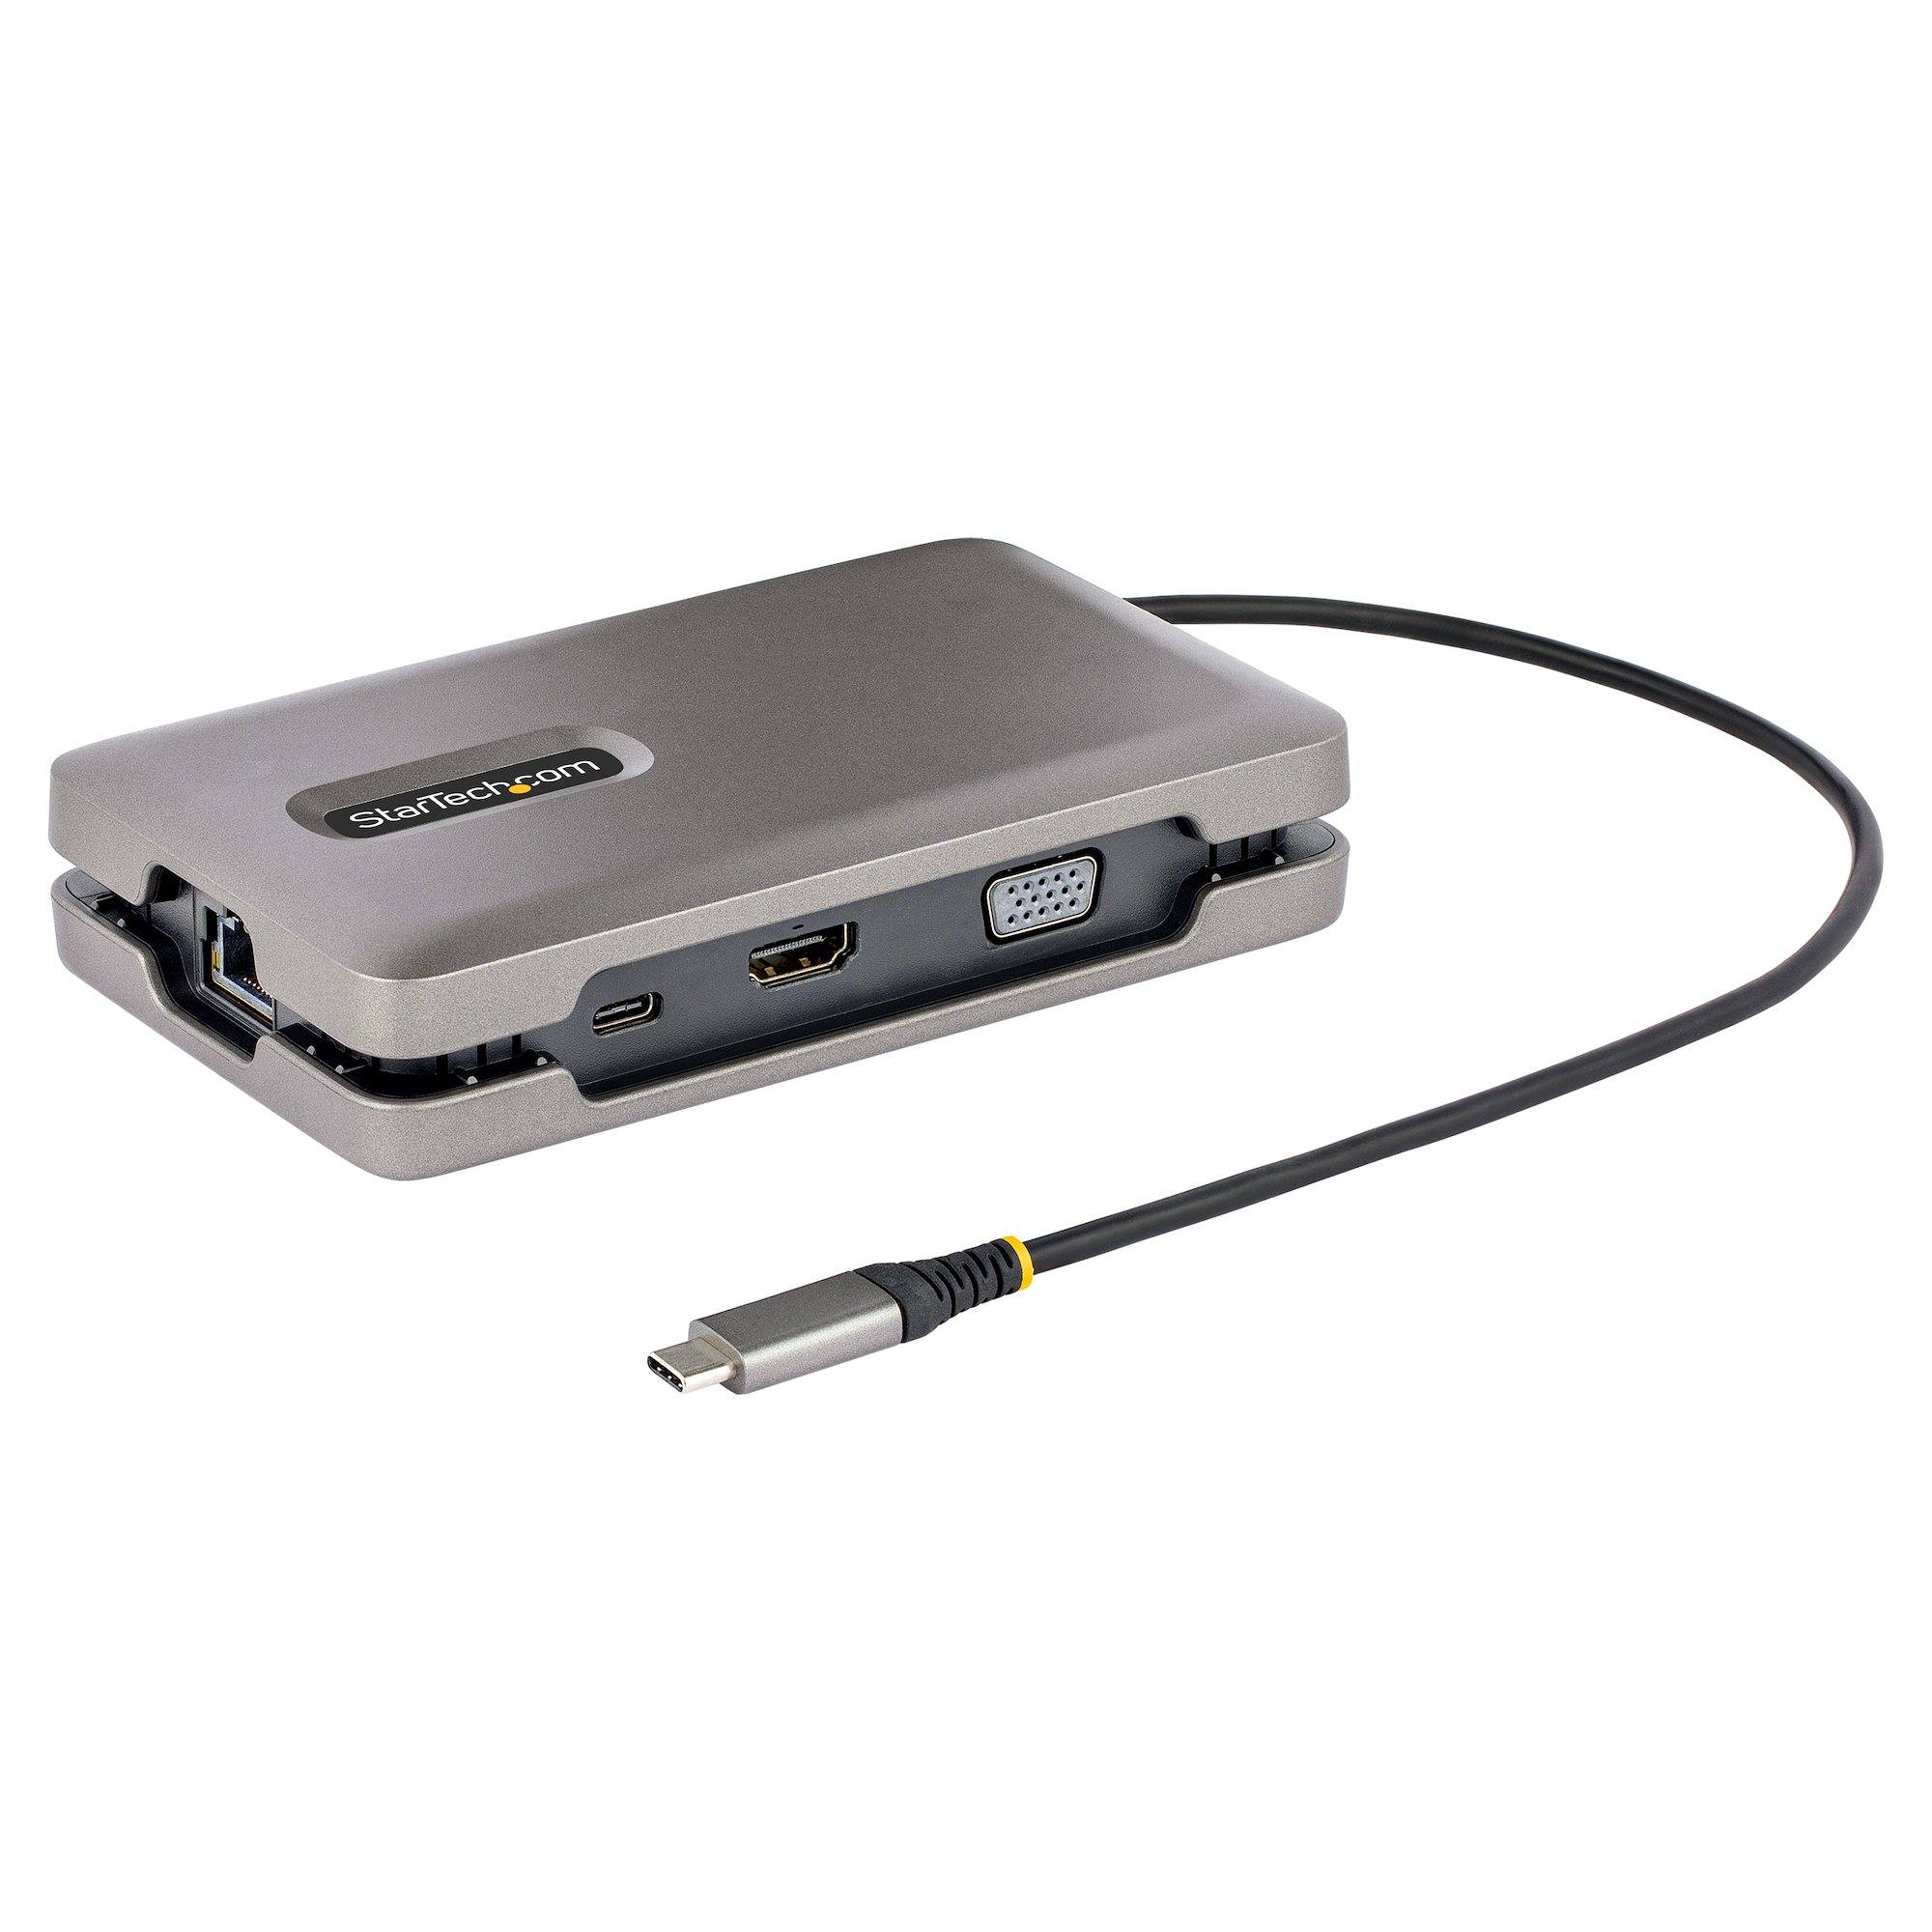 Rca Informatique - Image du produit : USB-C MULTIPORT ADAPTER W/USB-C DP ALT MODE VIDEO - 4K HDMI/VGA